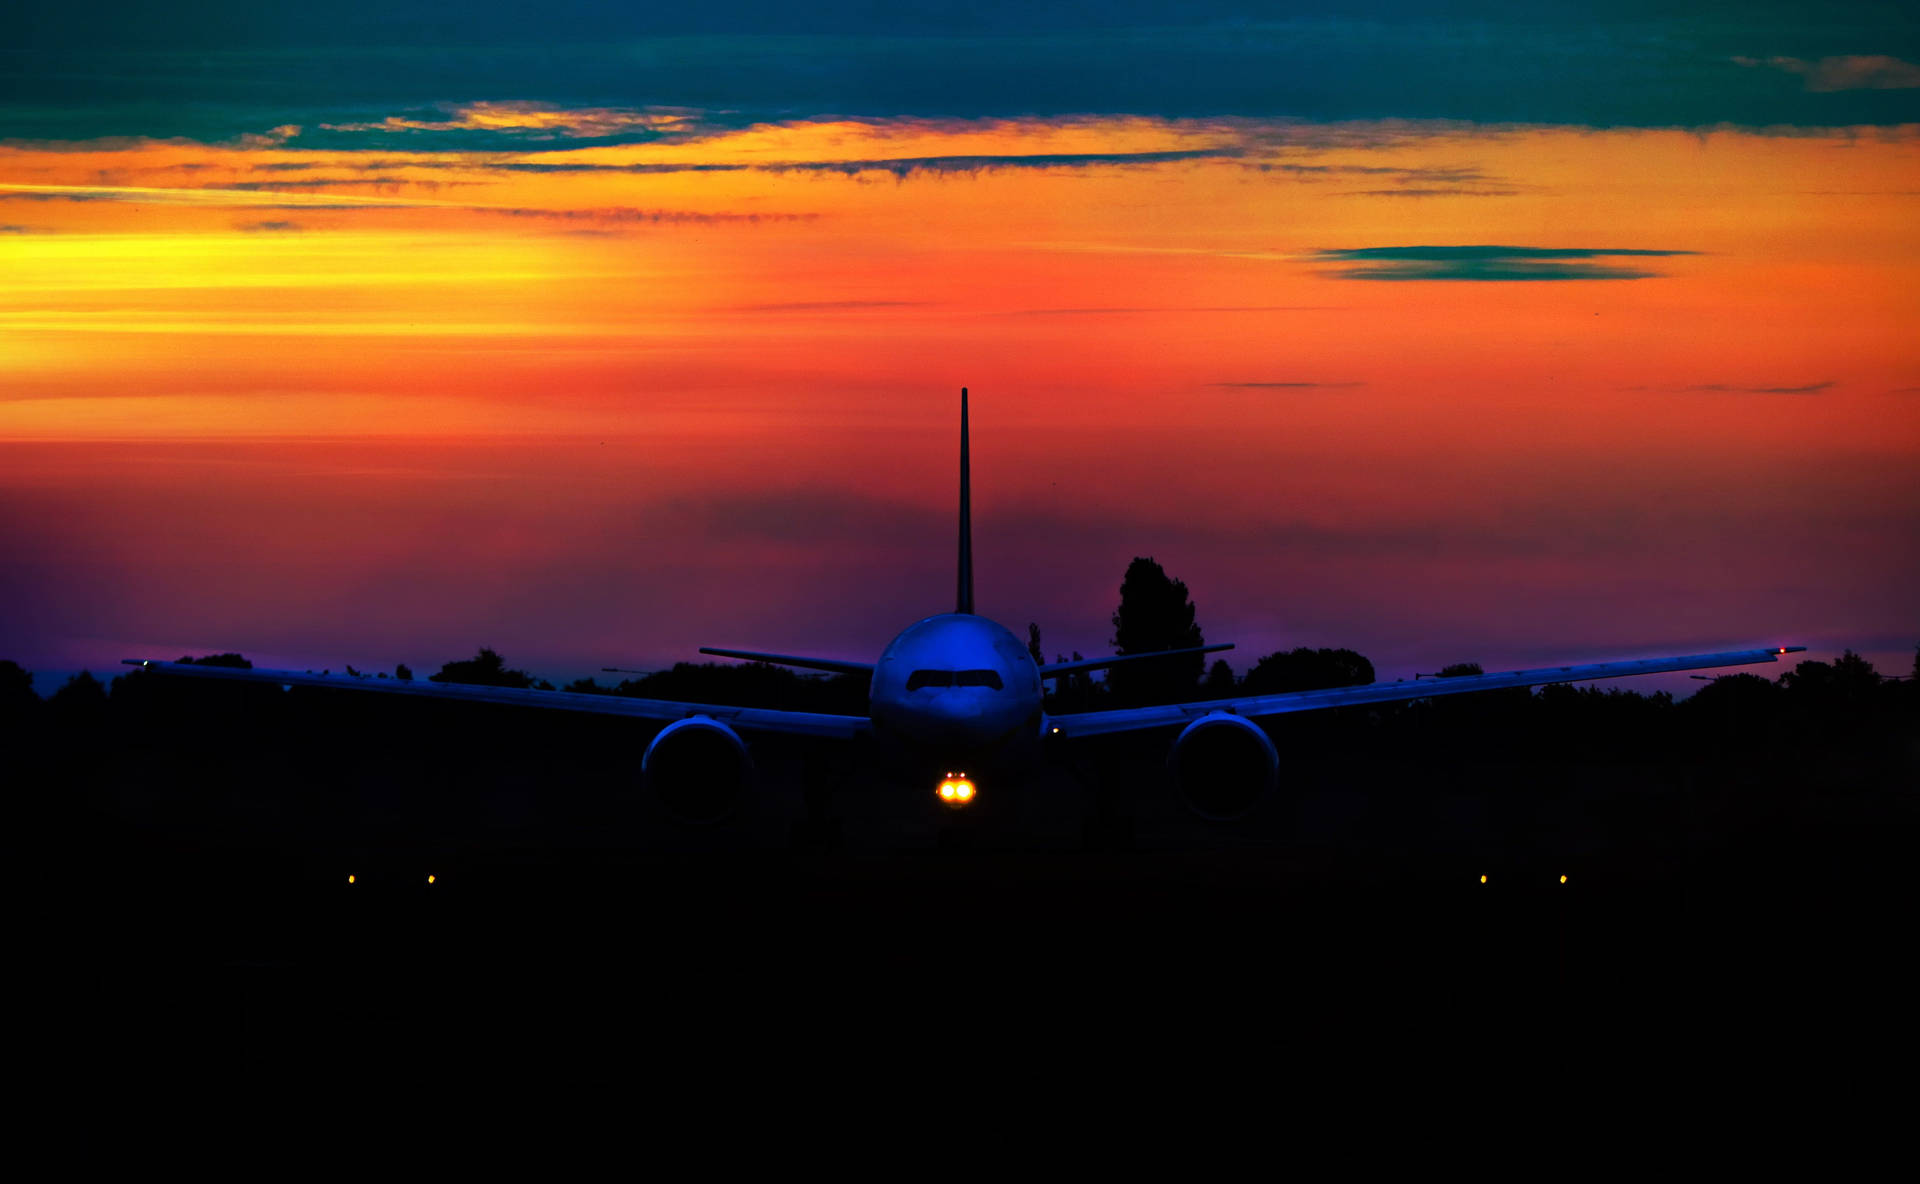 Beautiful Sunset Photo Of Airplane 4k